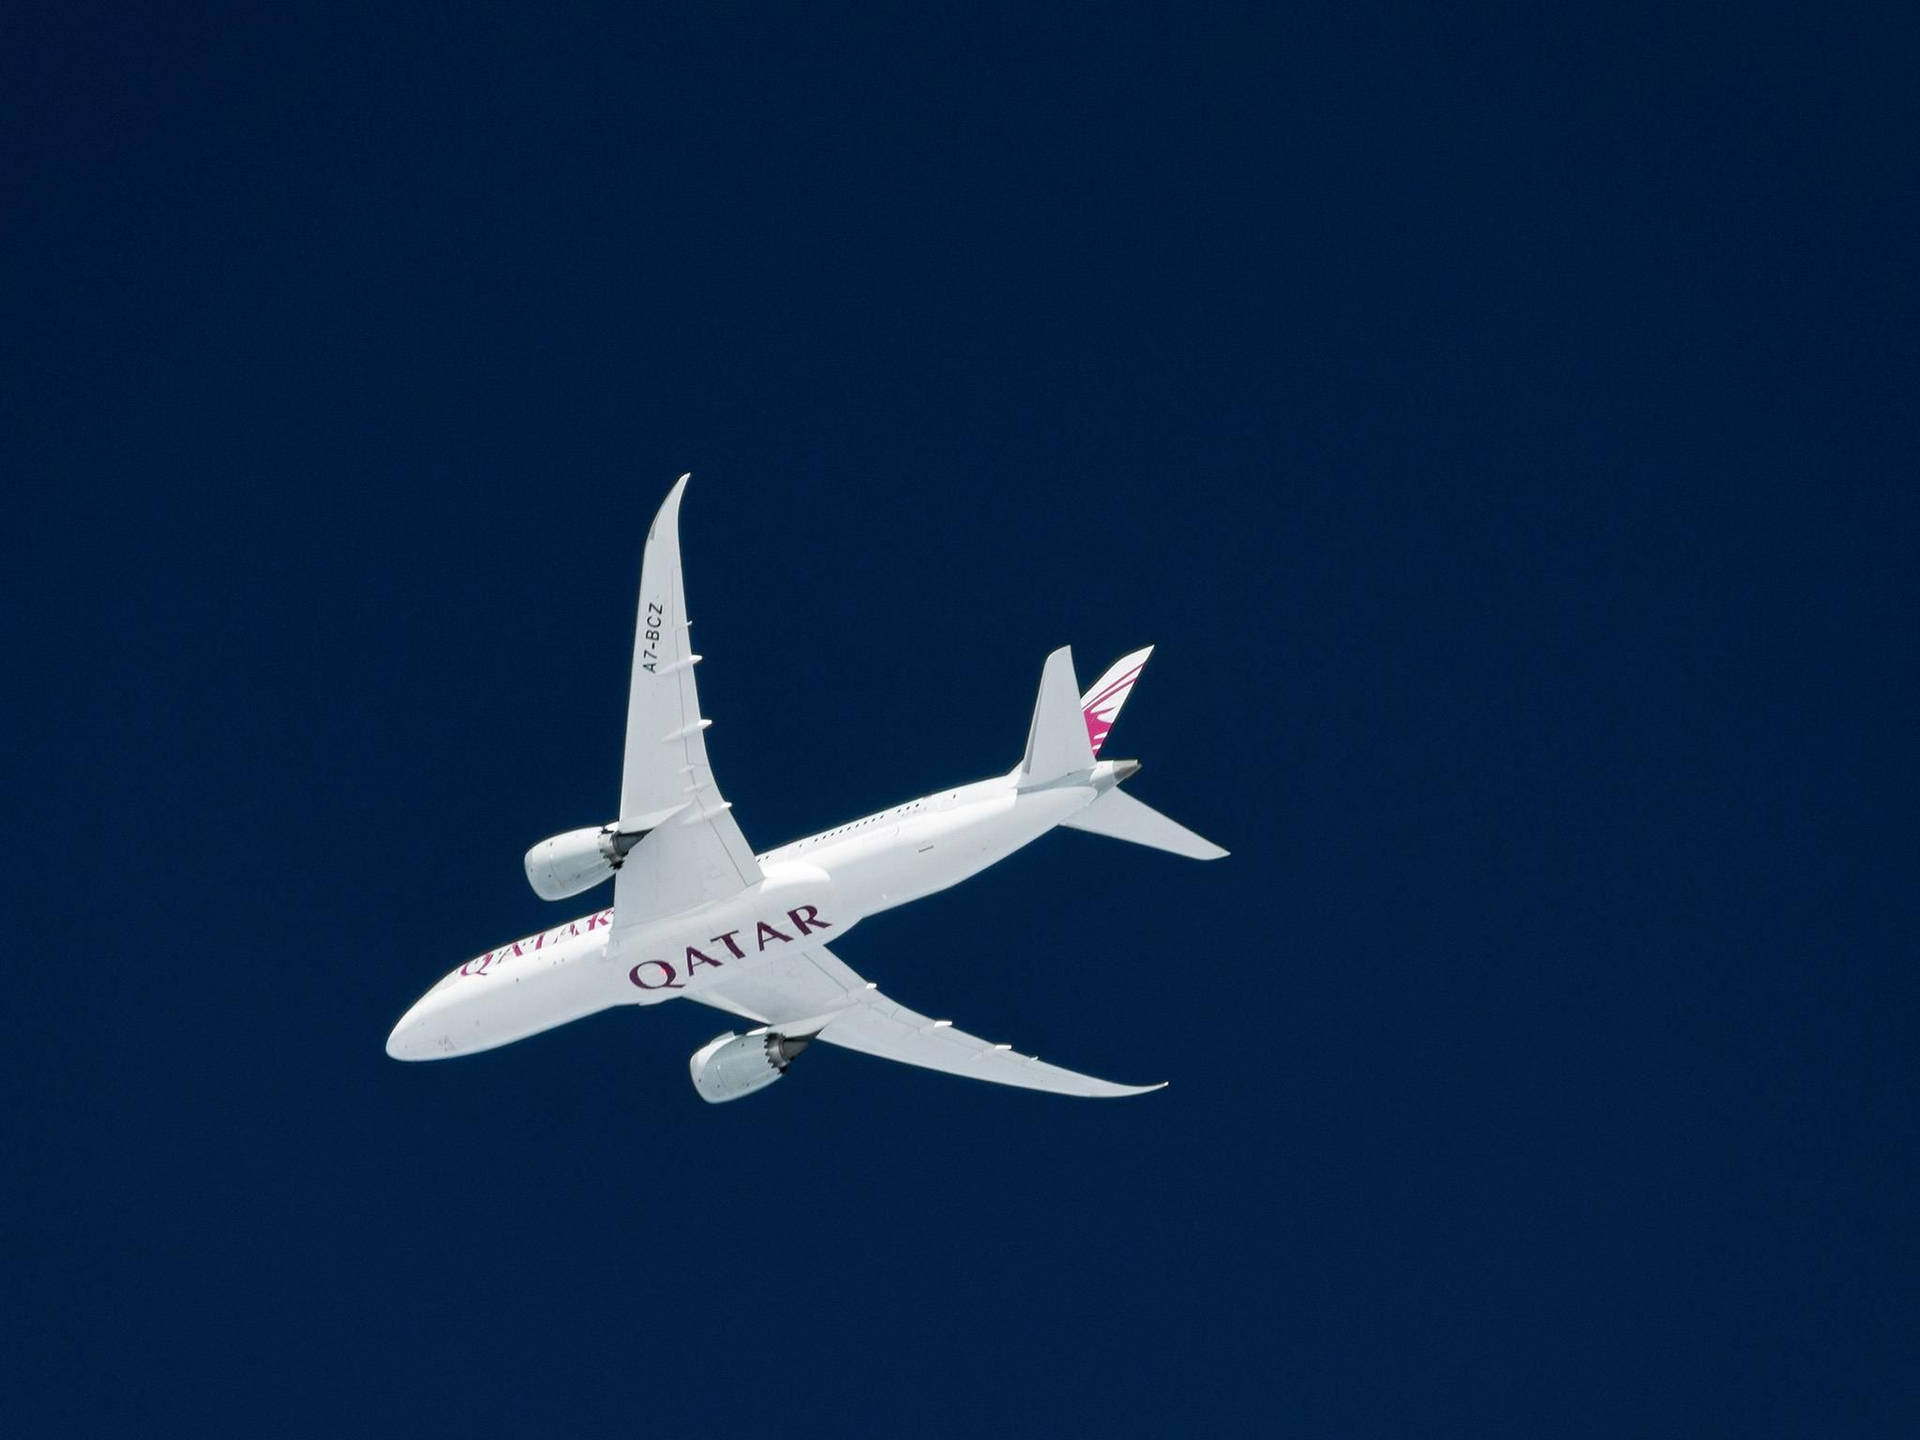 Majestic Qatar Airways Plane in Full Flight Wallpaper